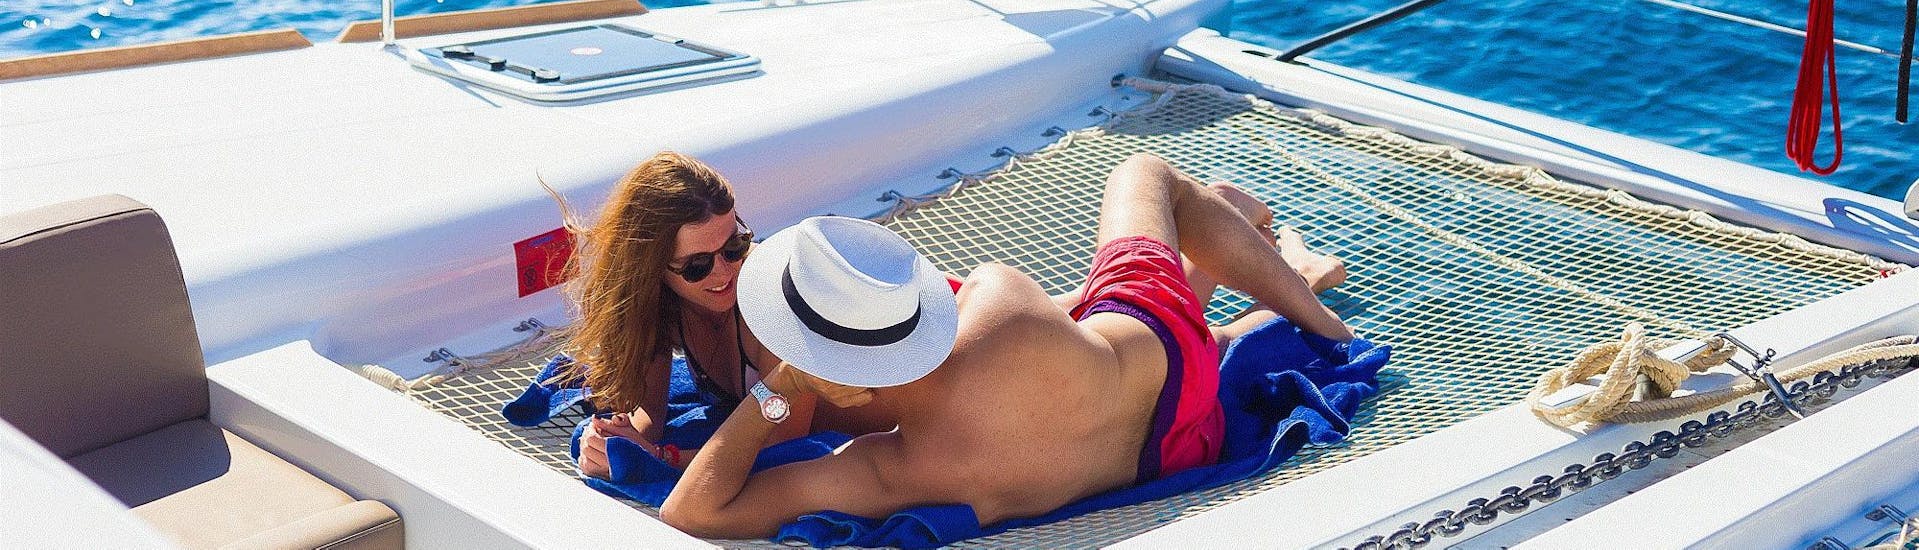 A couple is enjoying one of the sunbathing nets during their Luxury Catamaran Cruise around the Hotspots of Santorini with Spiridakos Sailing Cruises.